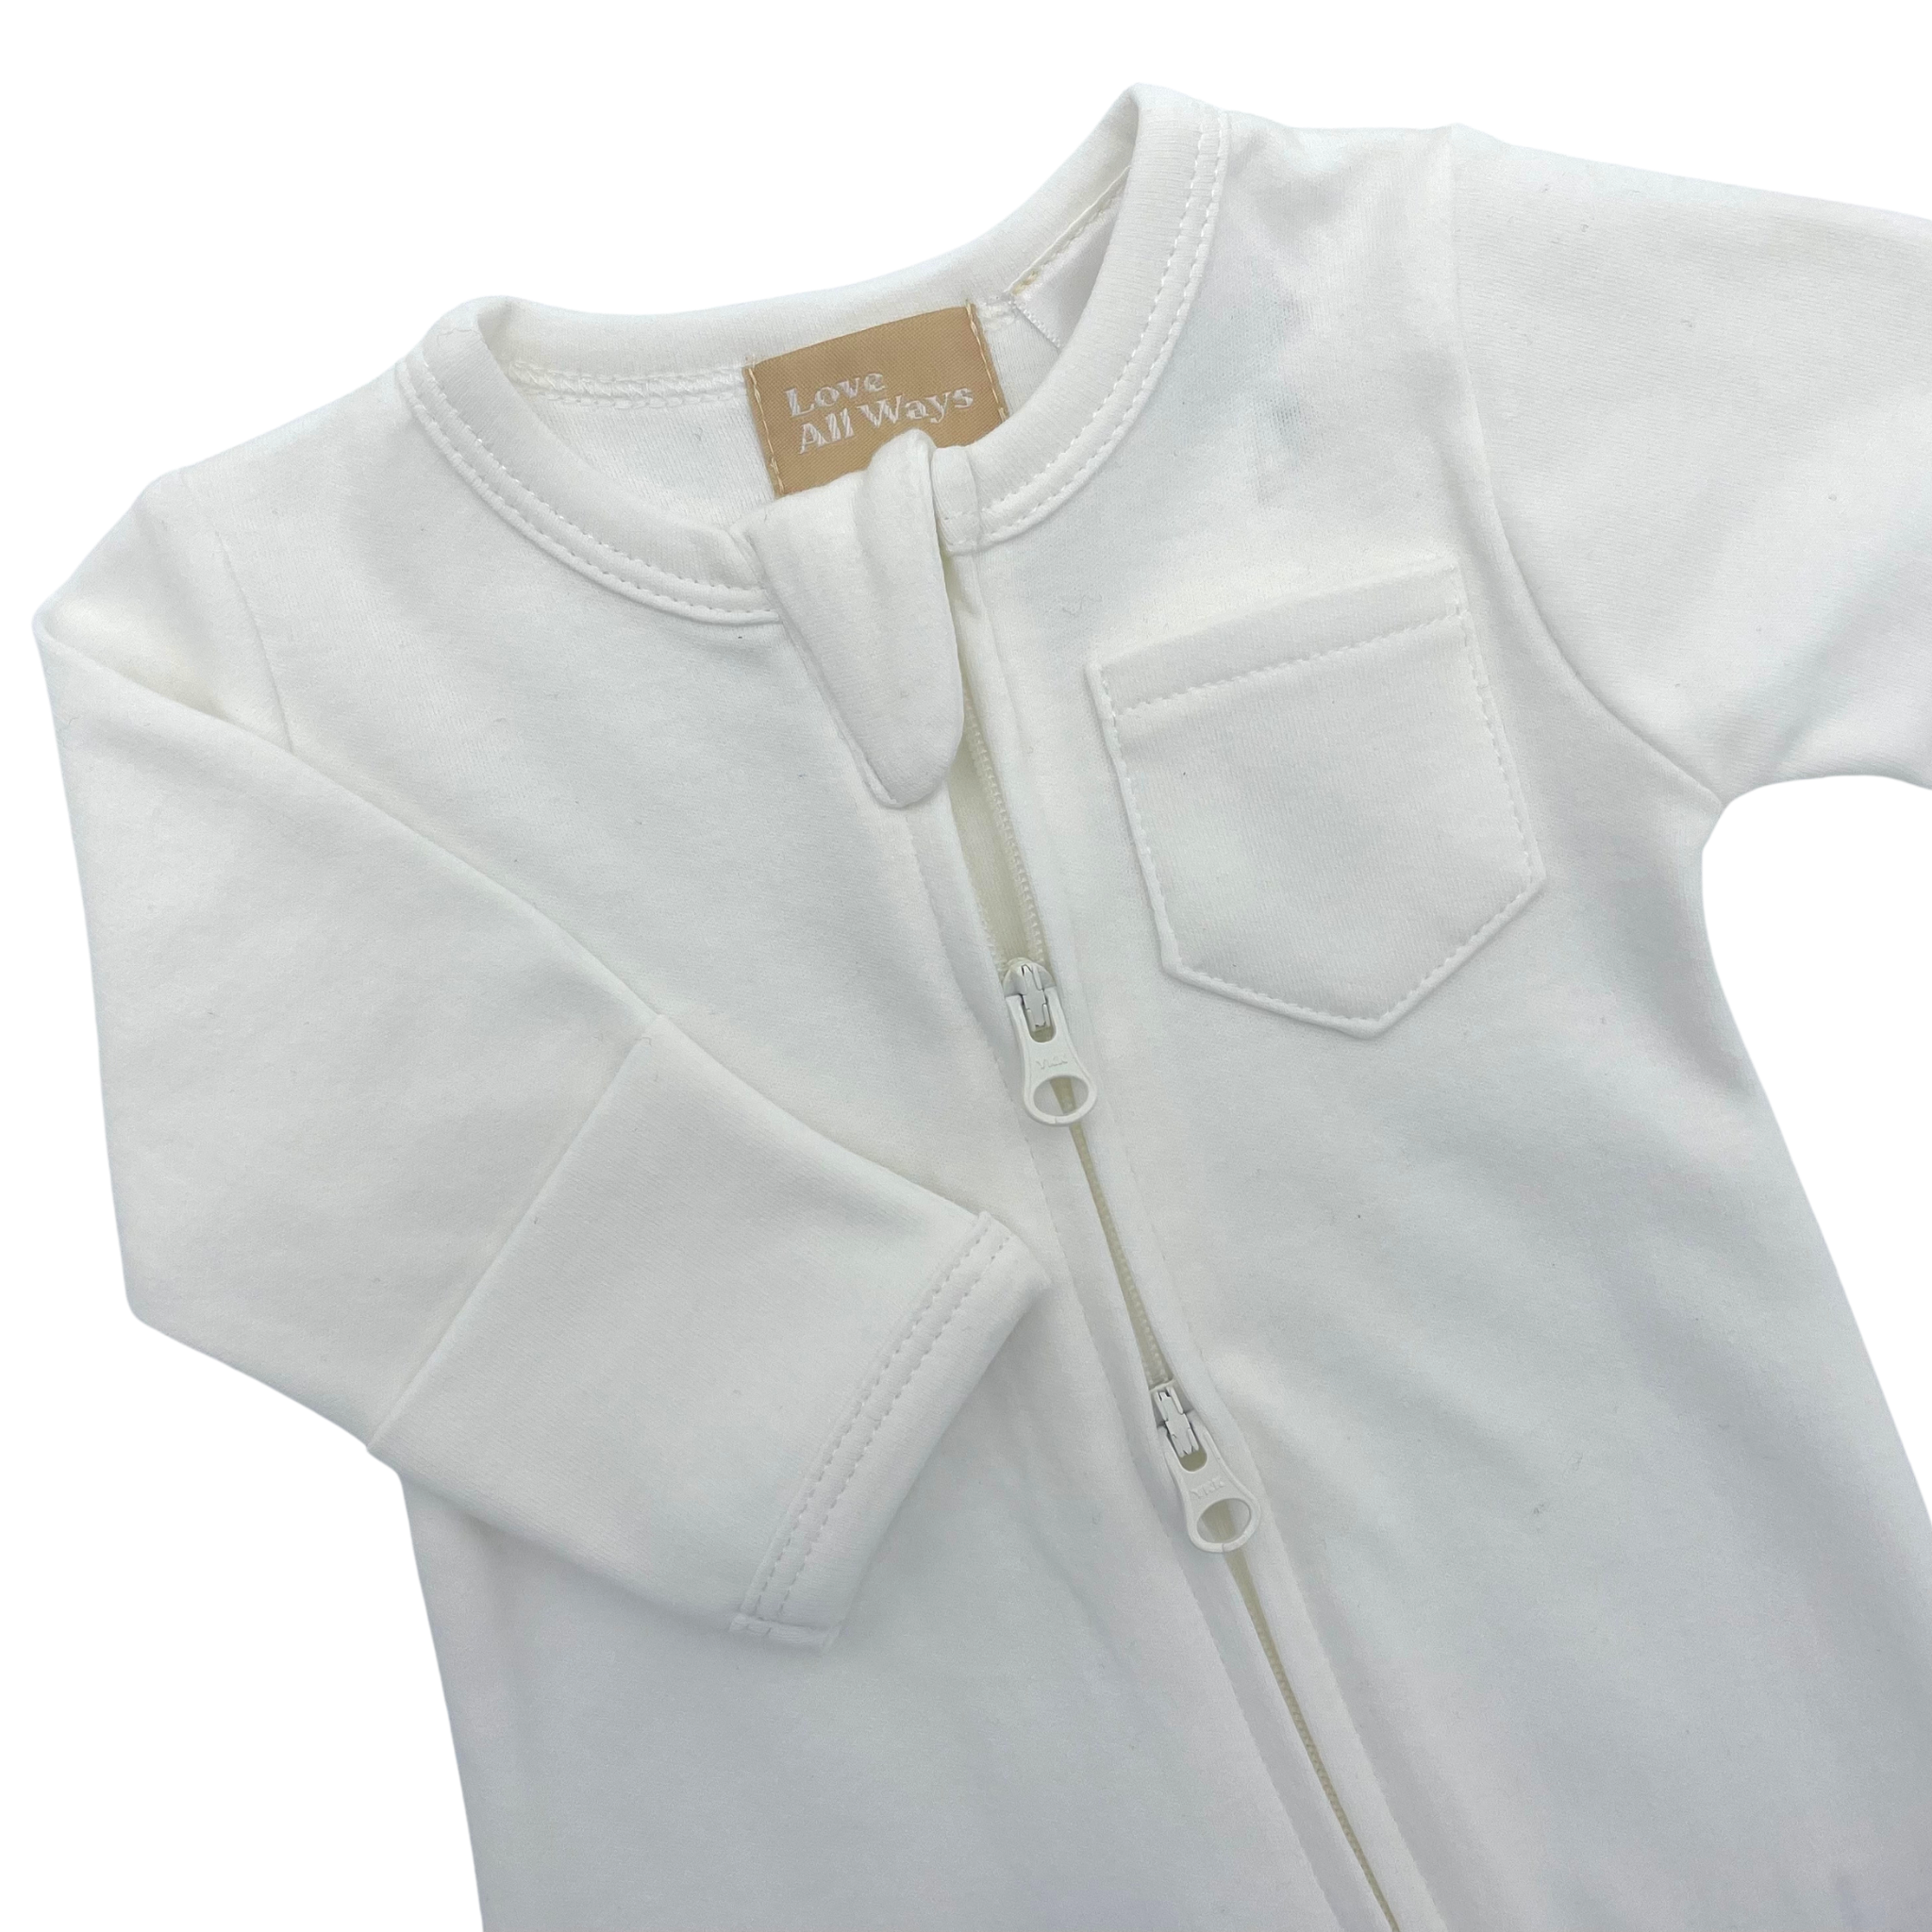 Love All Ways 100% Organic Cotton Jersey 2 Way Zipper Romper - White